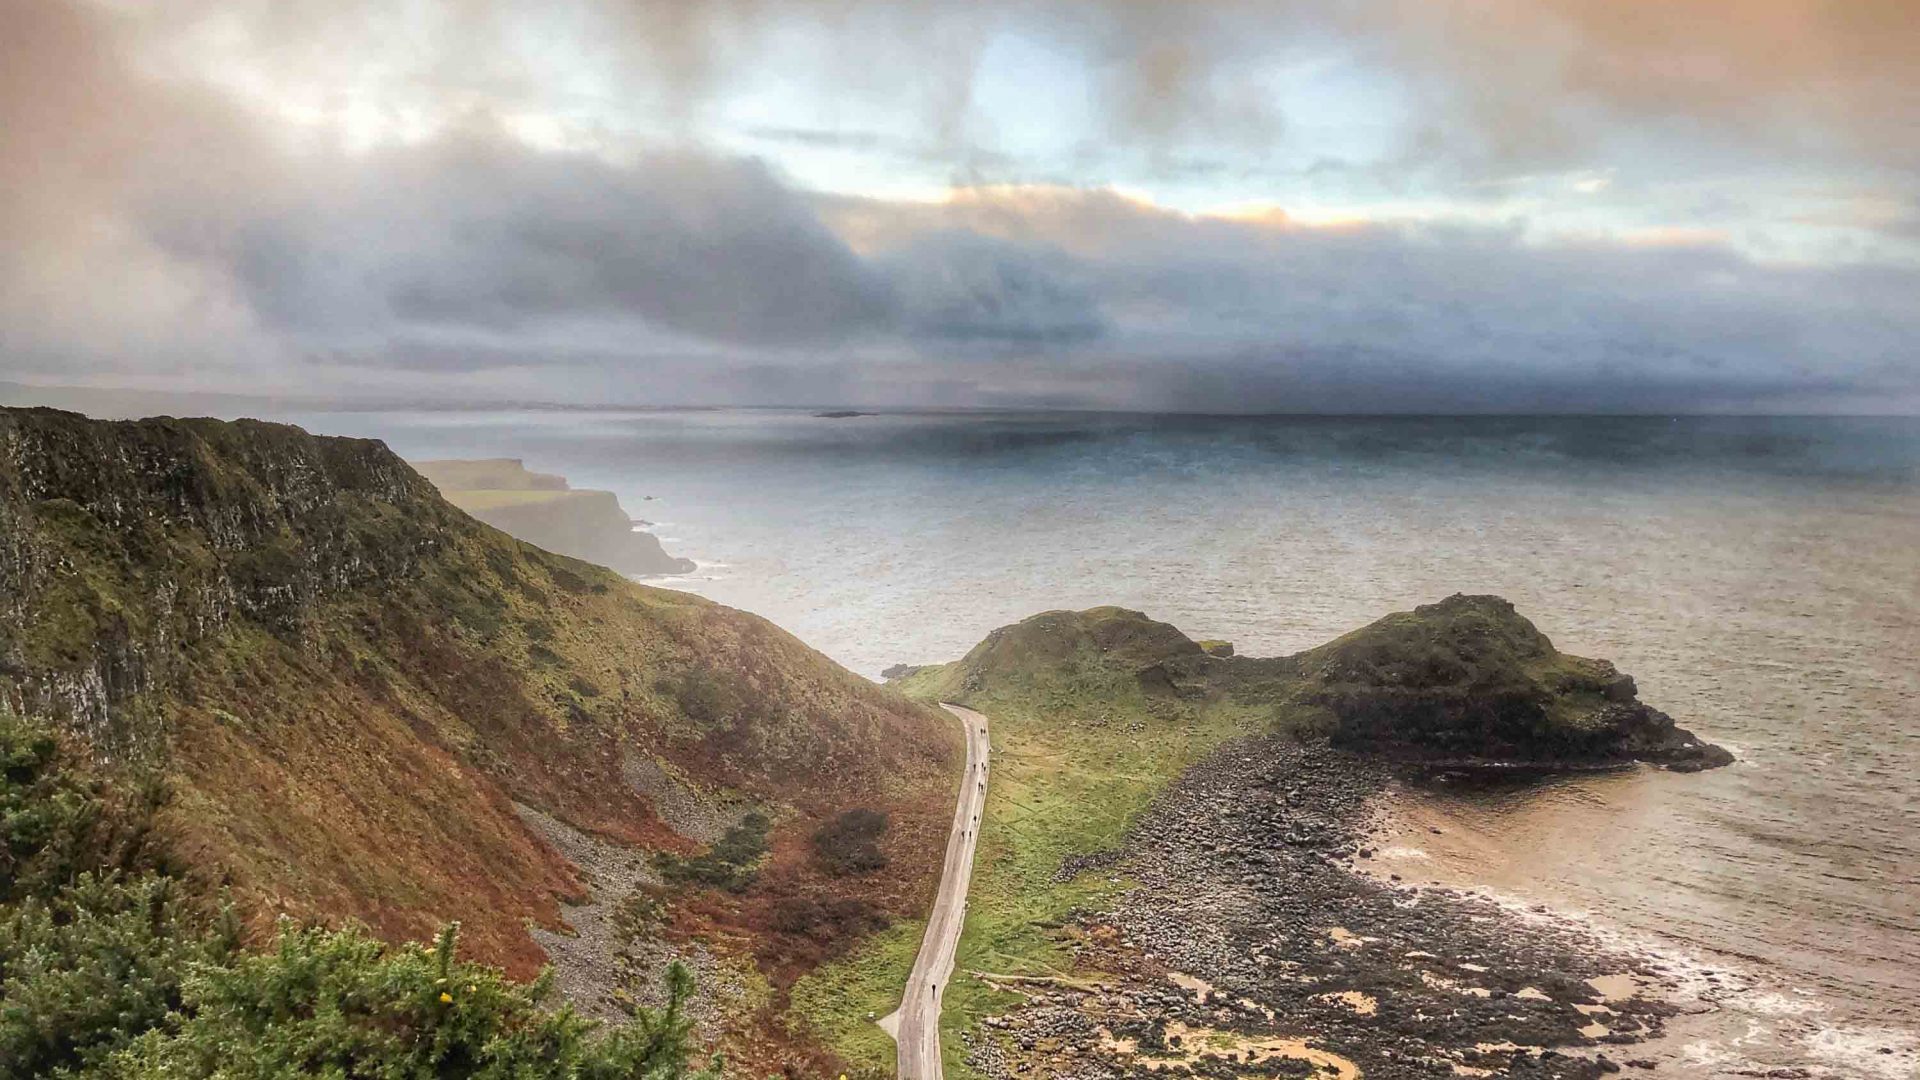 The dramatic Giant's Causeway coastline on the north coast of Northern Ireland.